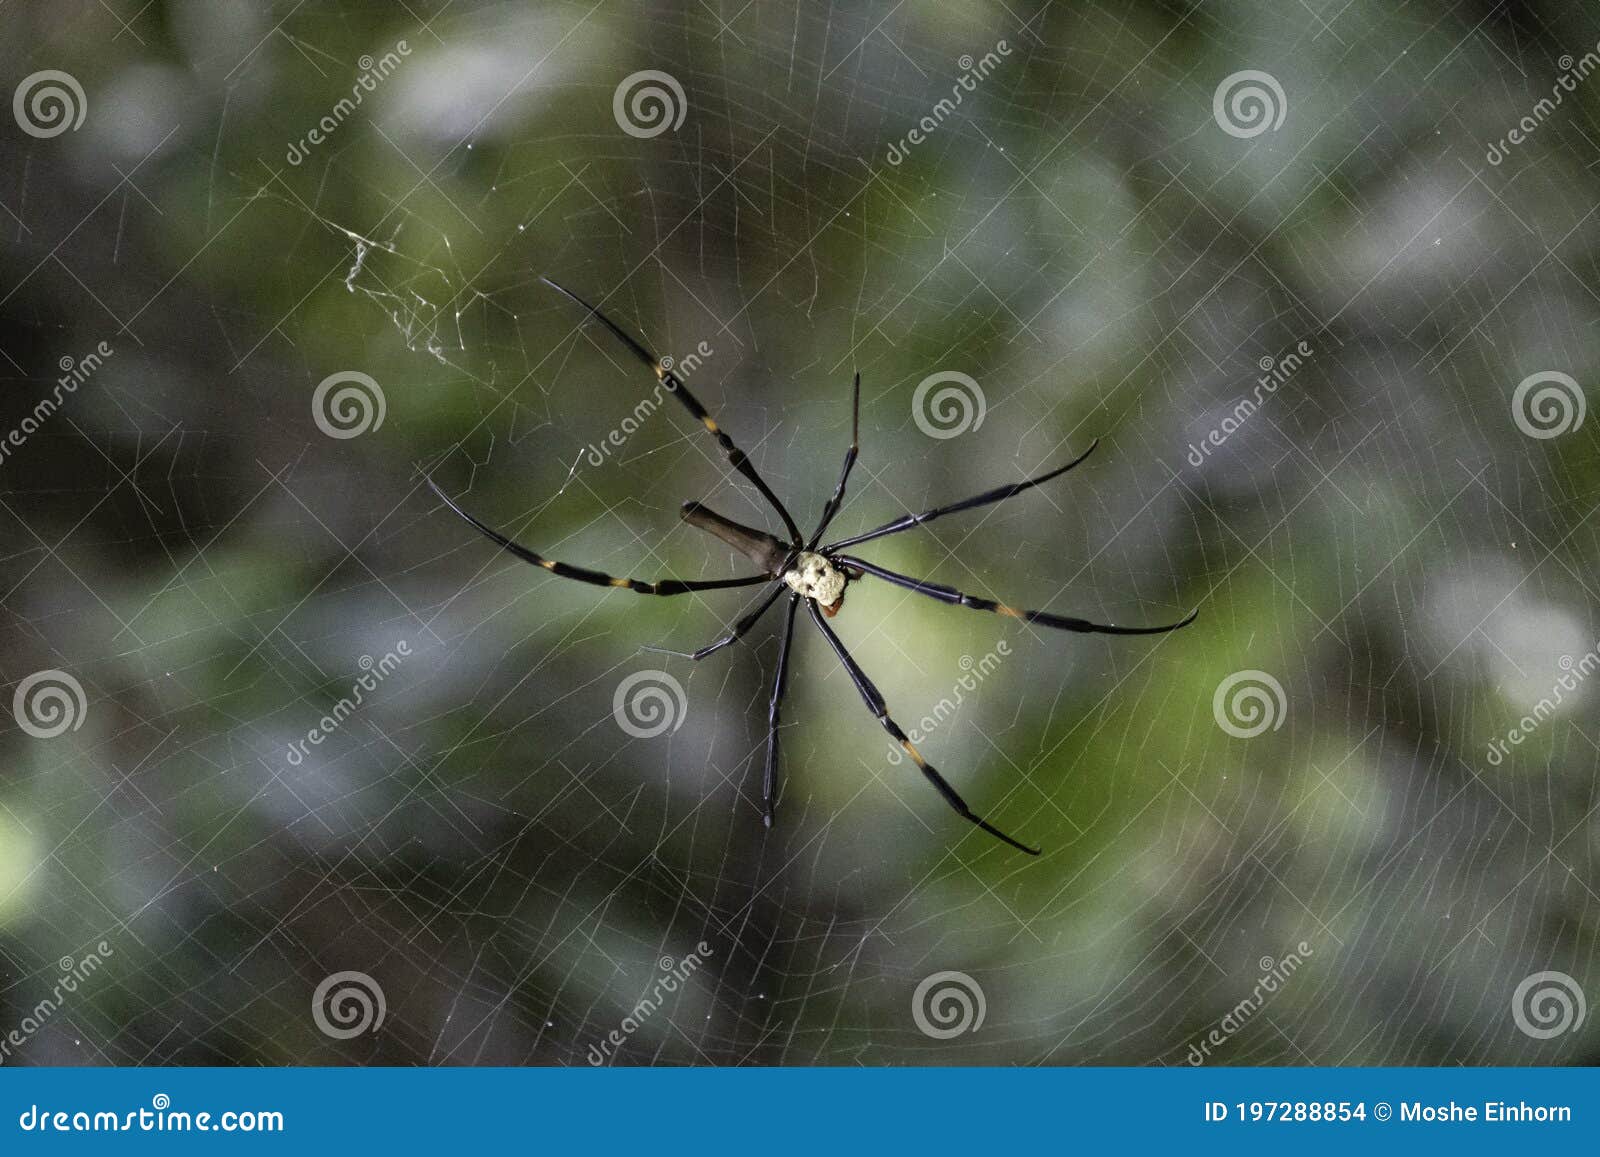 An Australian Golden Weaver Spider Stock Photo - Image of spider, poisonous: